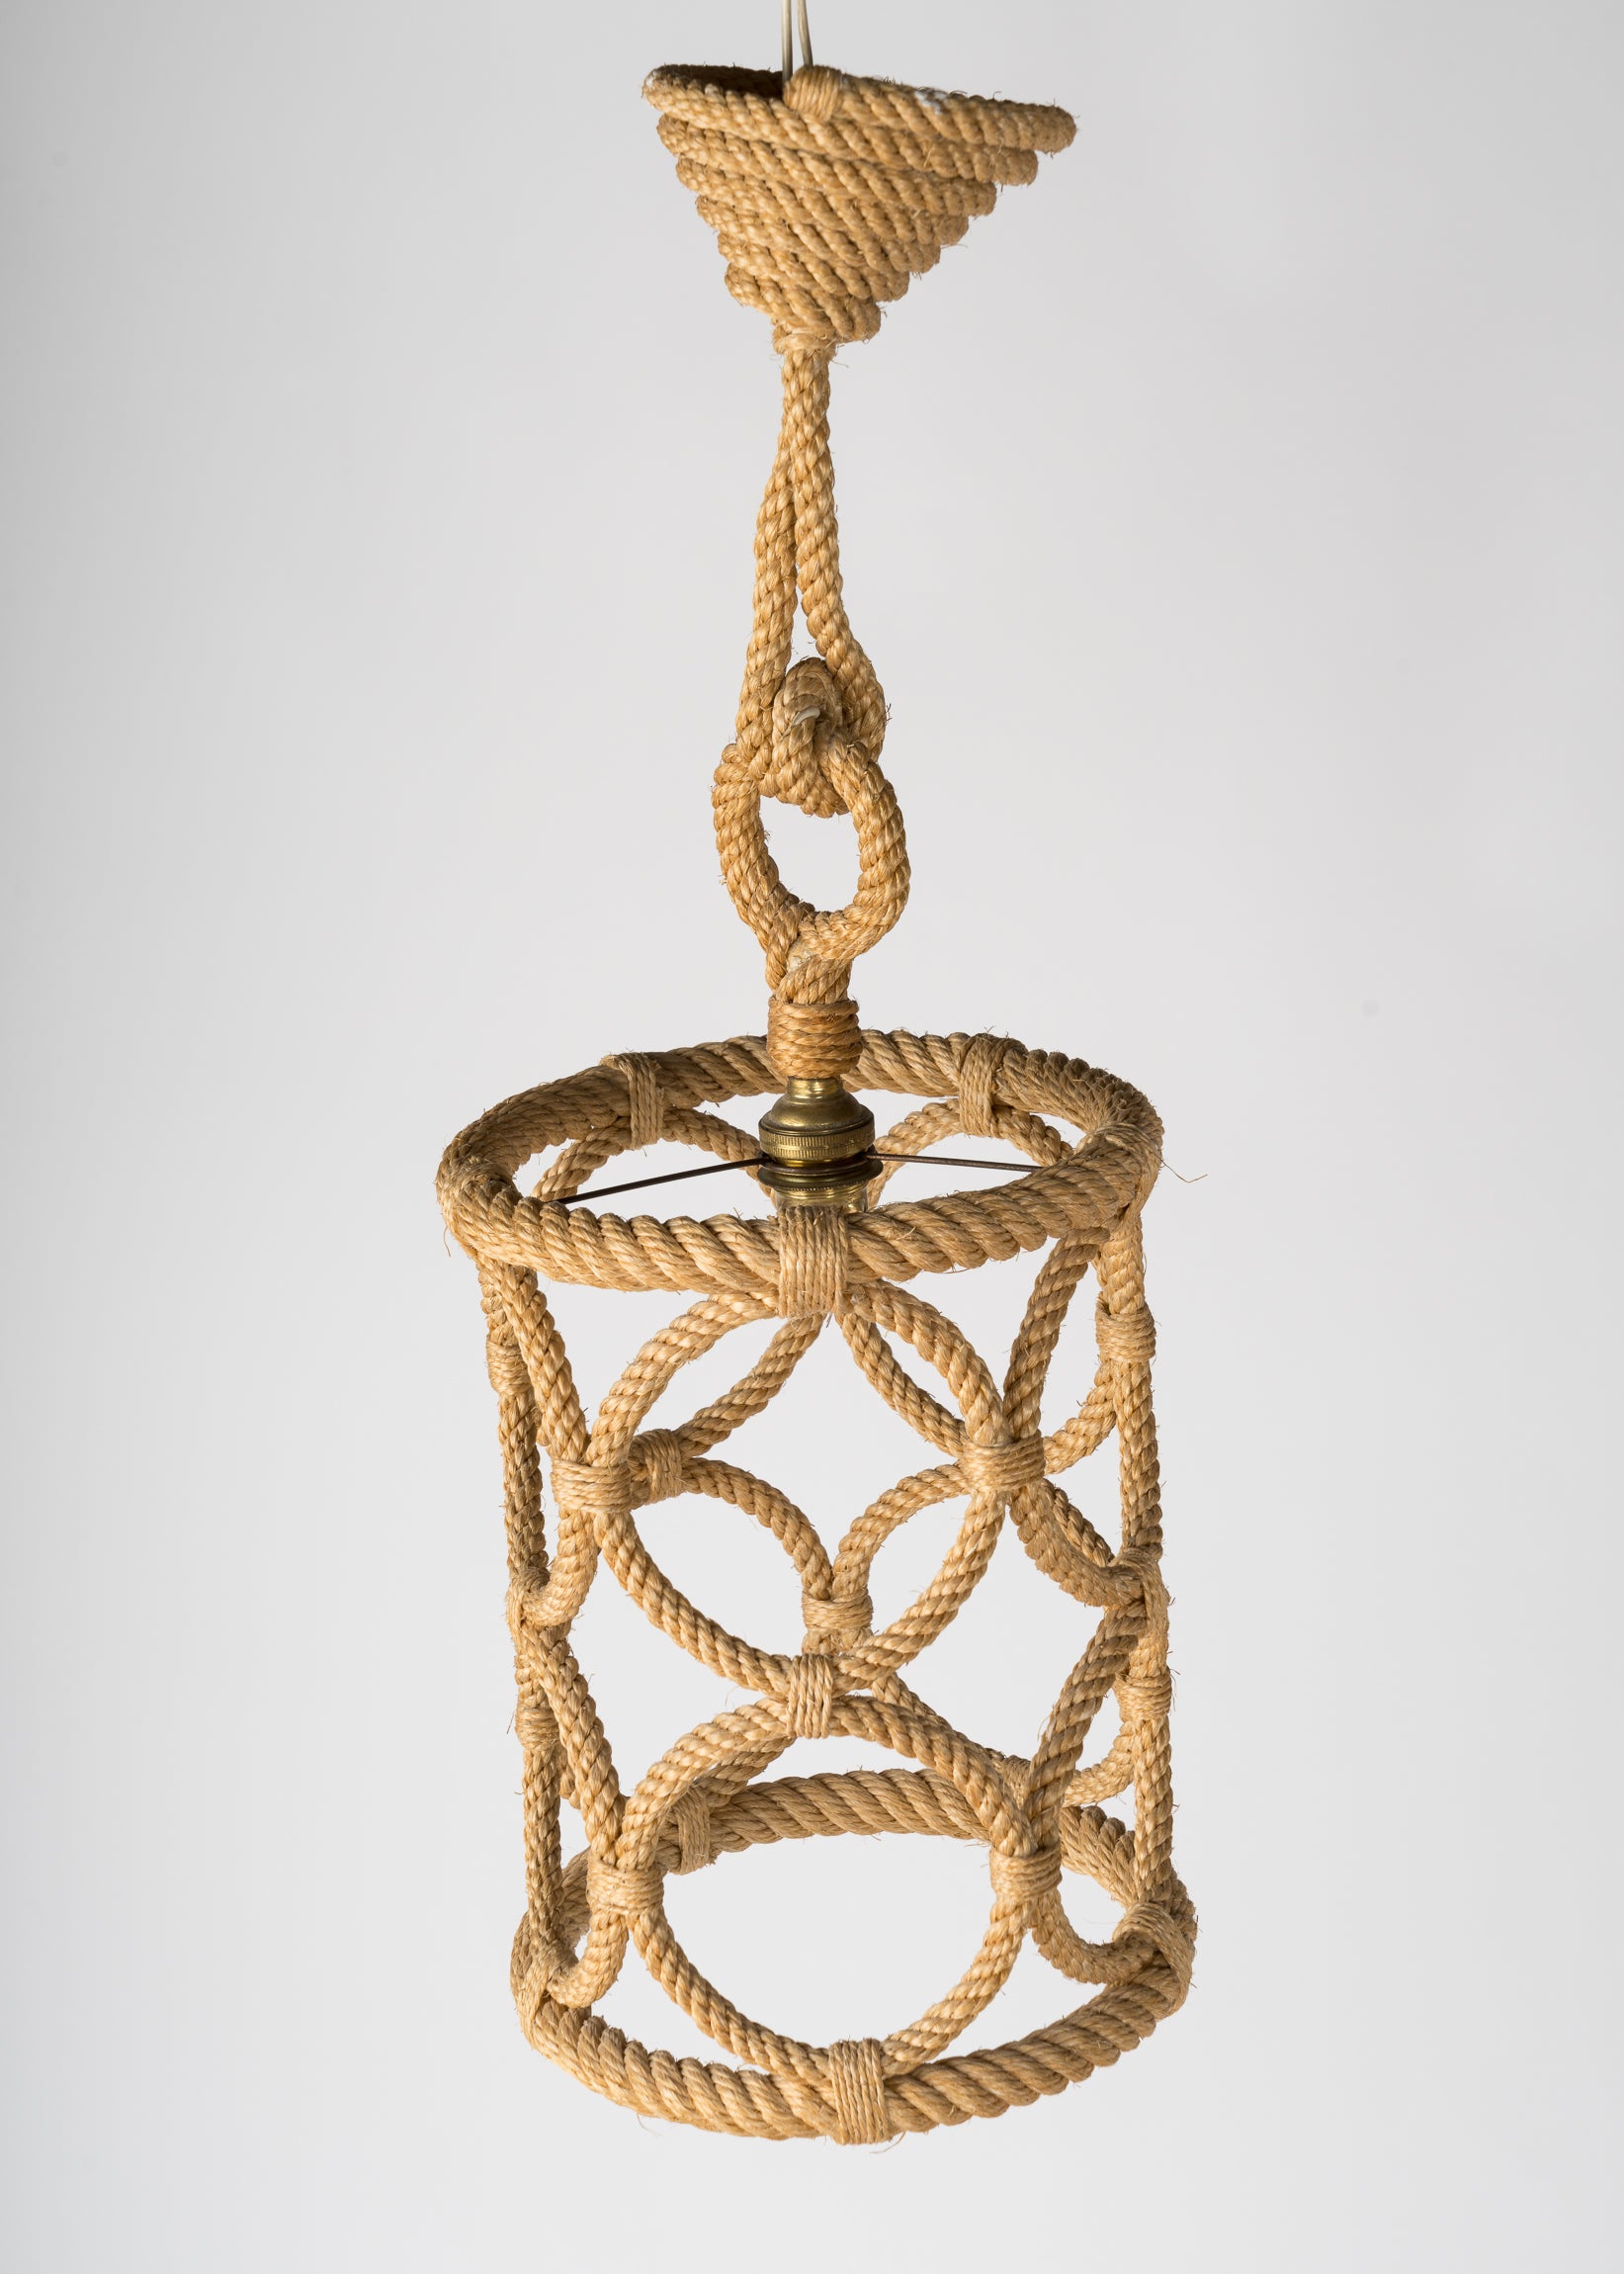 Lantern Shaped Rope Pendant by Audoux Minnet, France, 1960's